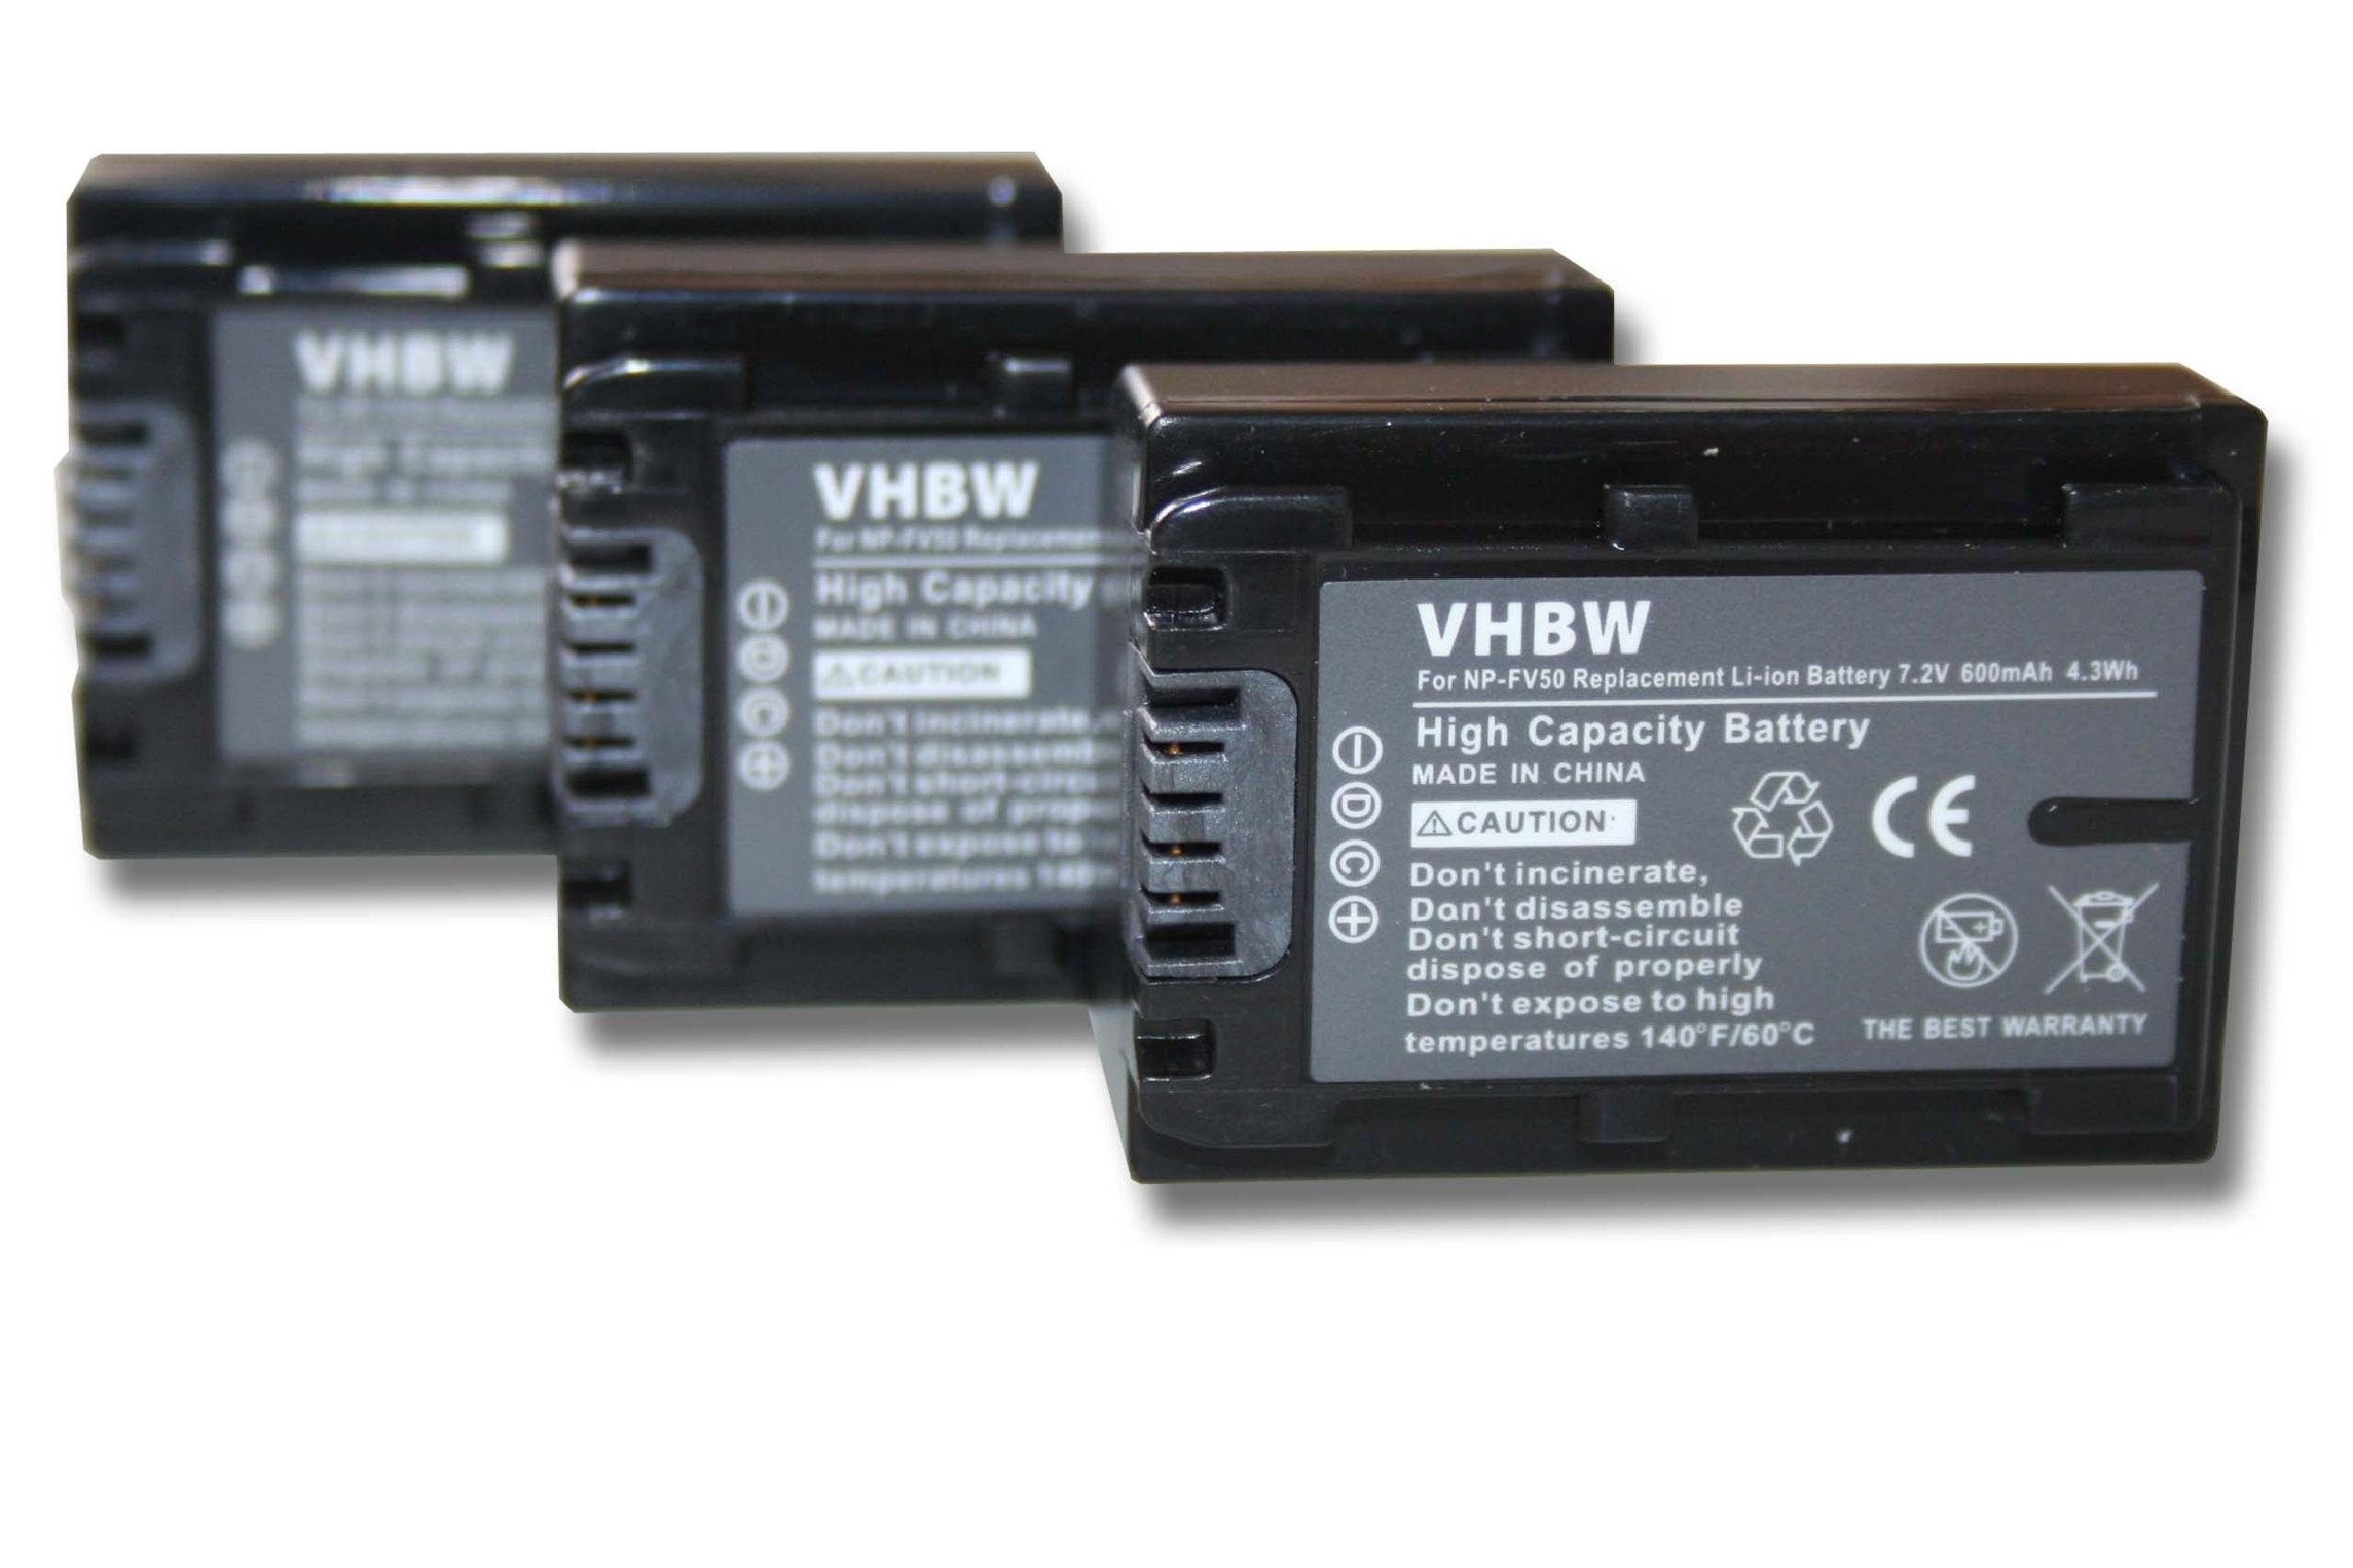 HDR-CX220EB, Camcorder HDR-CX mAh (600mAh, HDR-CX220E, Li-Ion) für HDR-CX220EL passend Sony vhbw 600 Kamera-Akku 7,2V, Serie